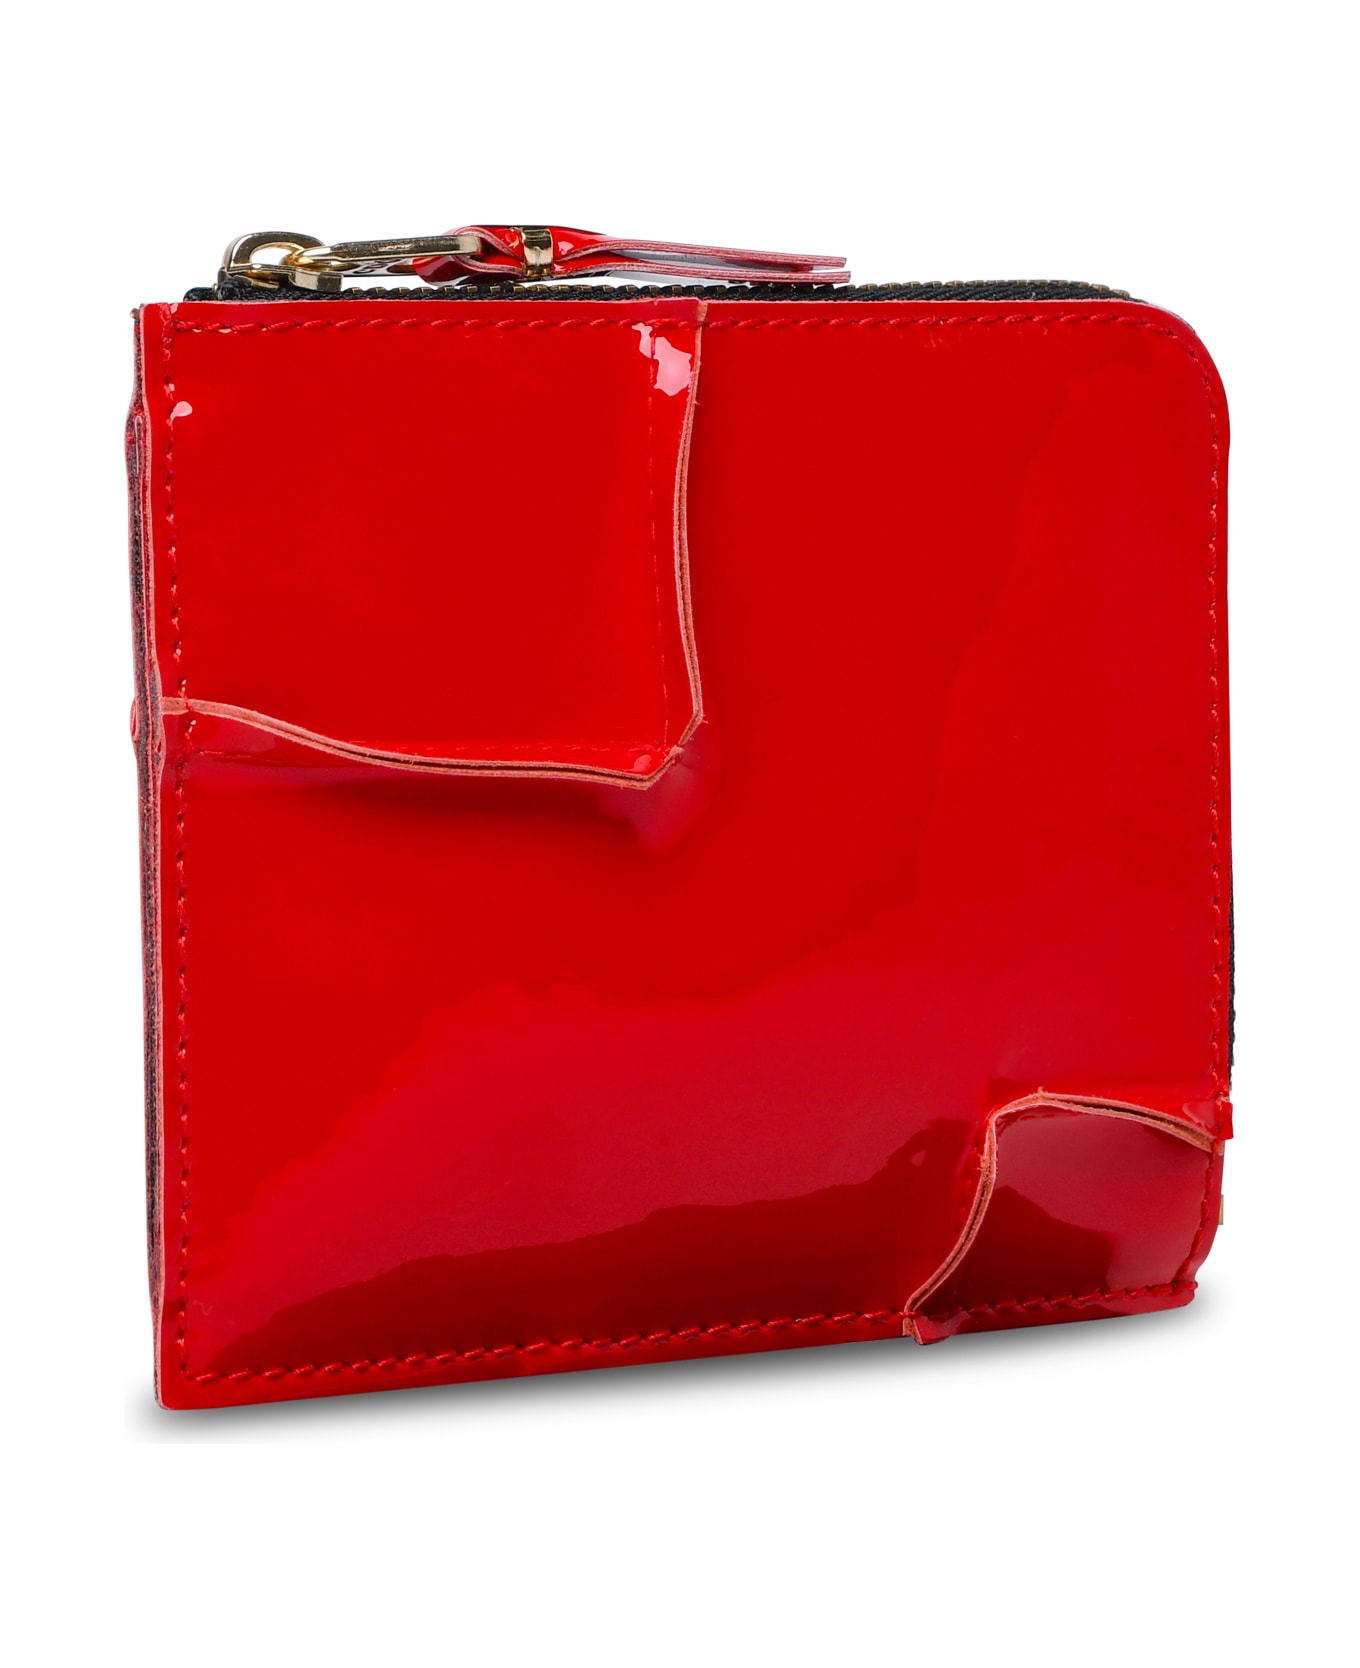 Comme des Garçons Wallet 'medley' Red Leather Wallet - Red